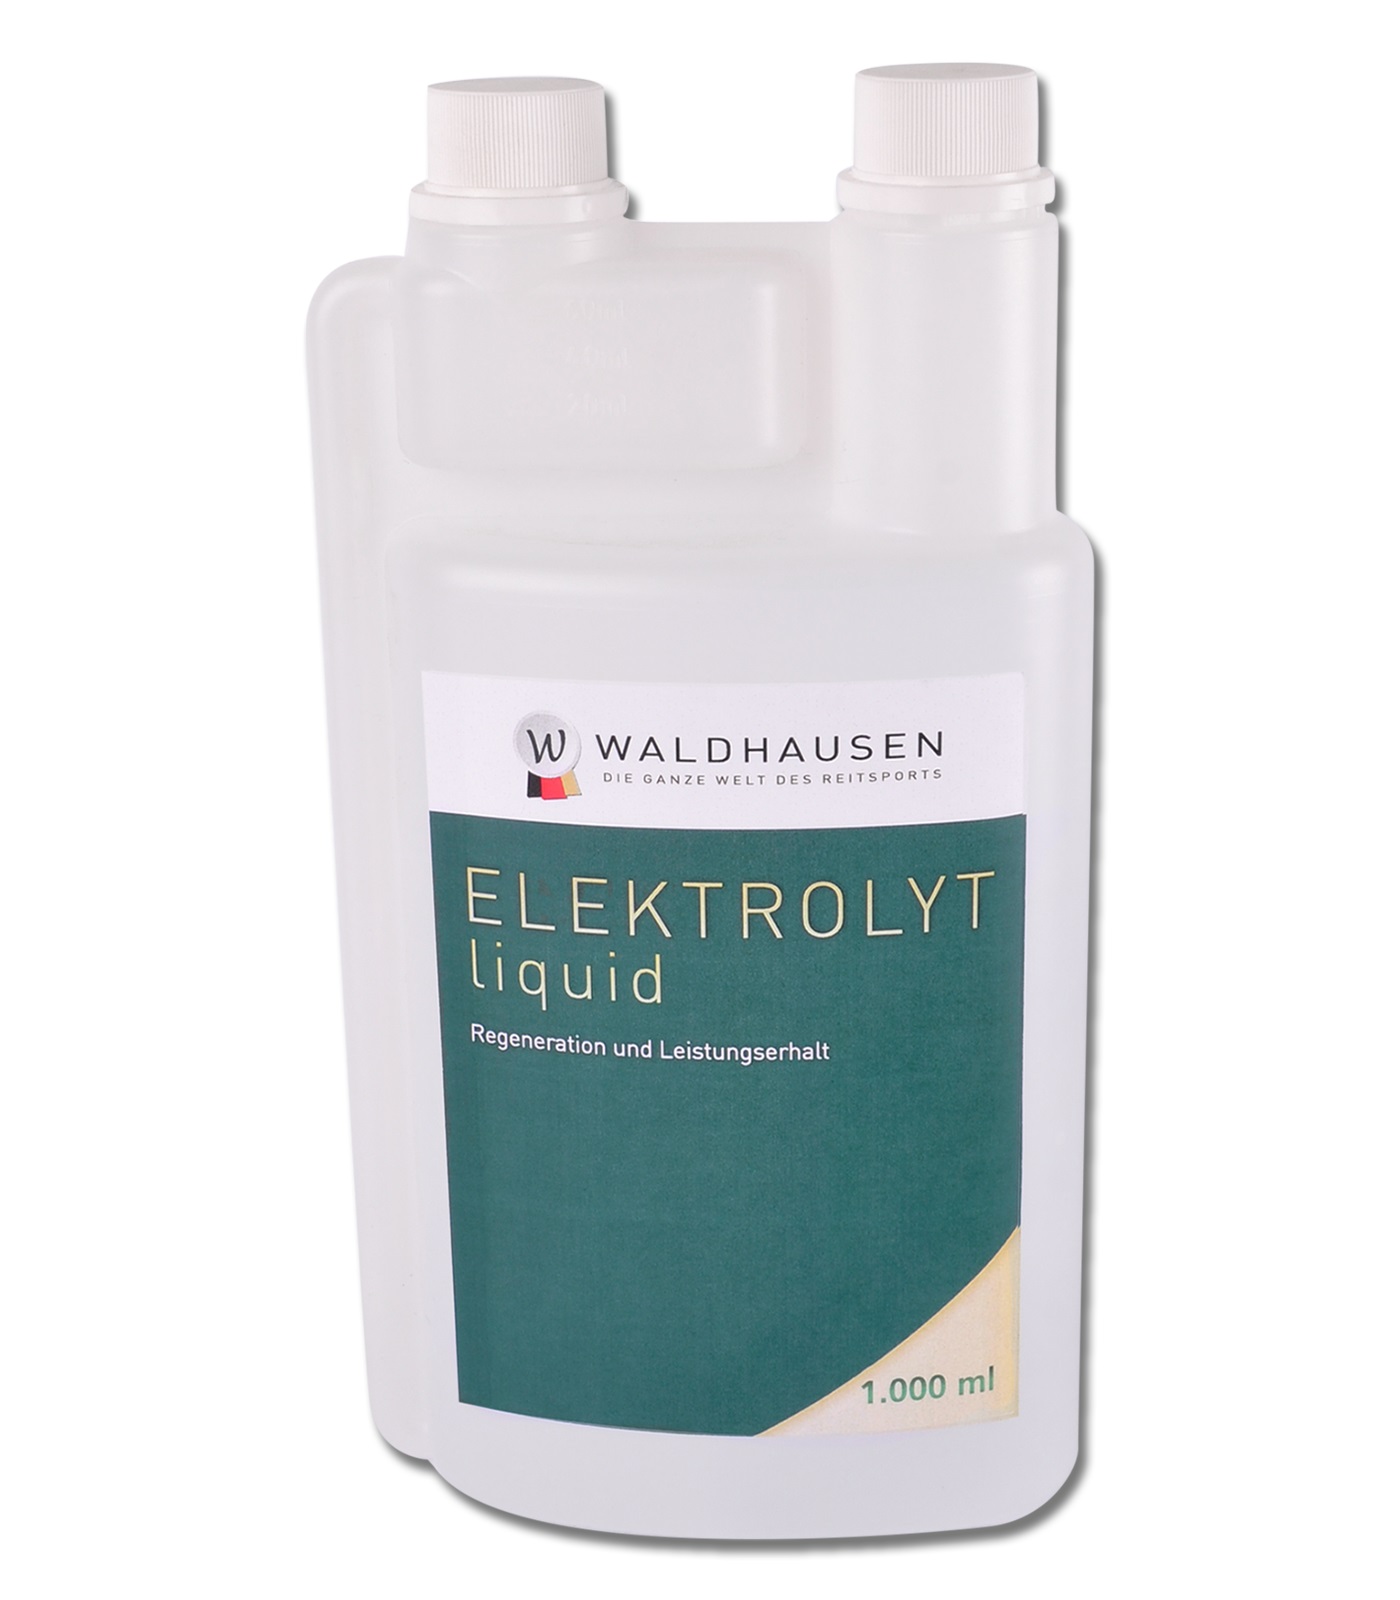 Waldhausen Elektrolyt liquid